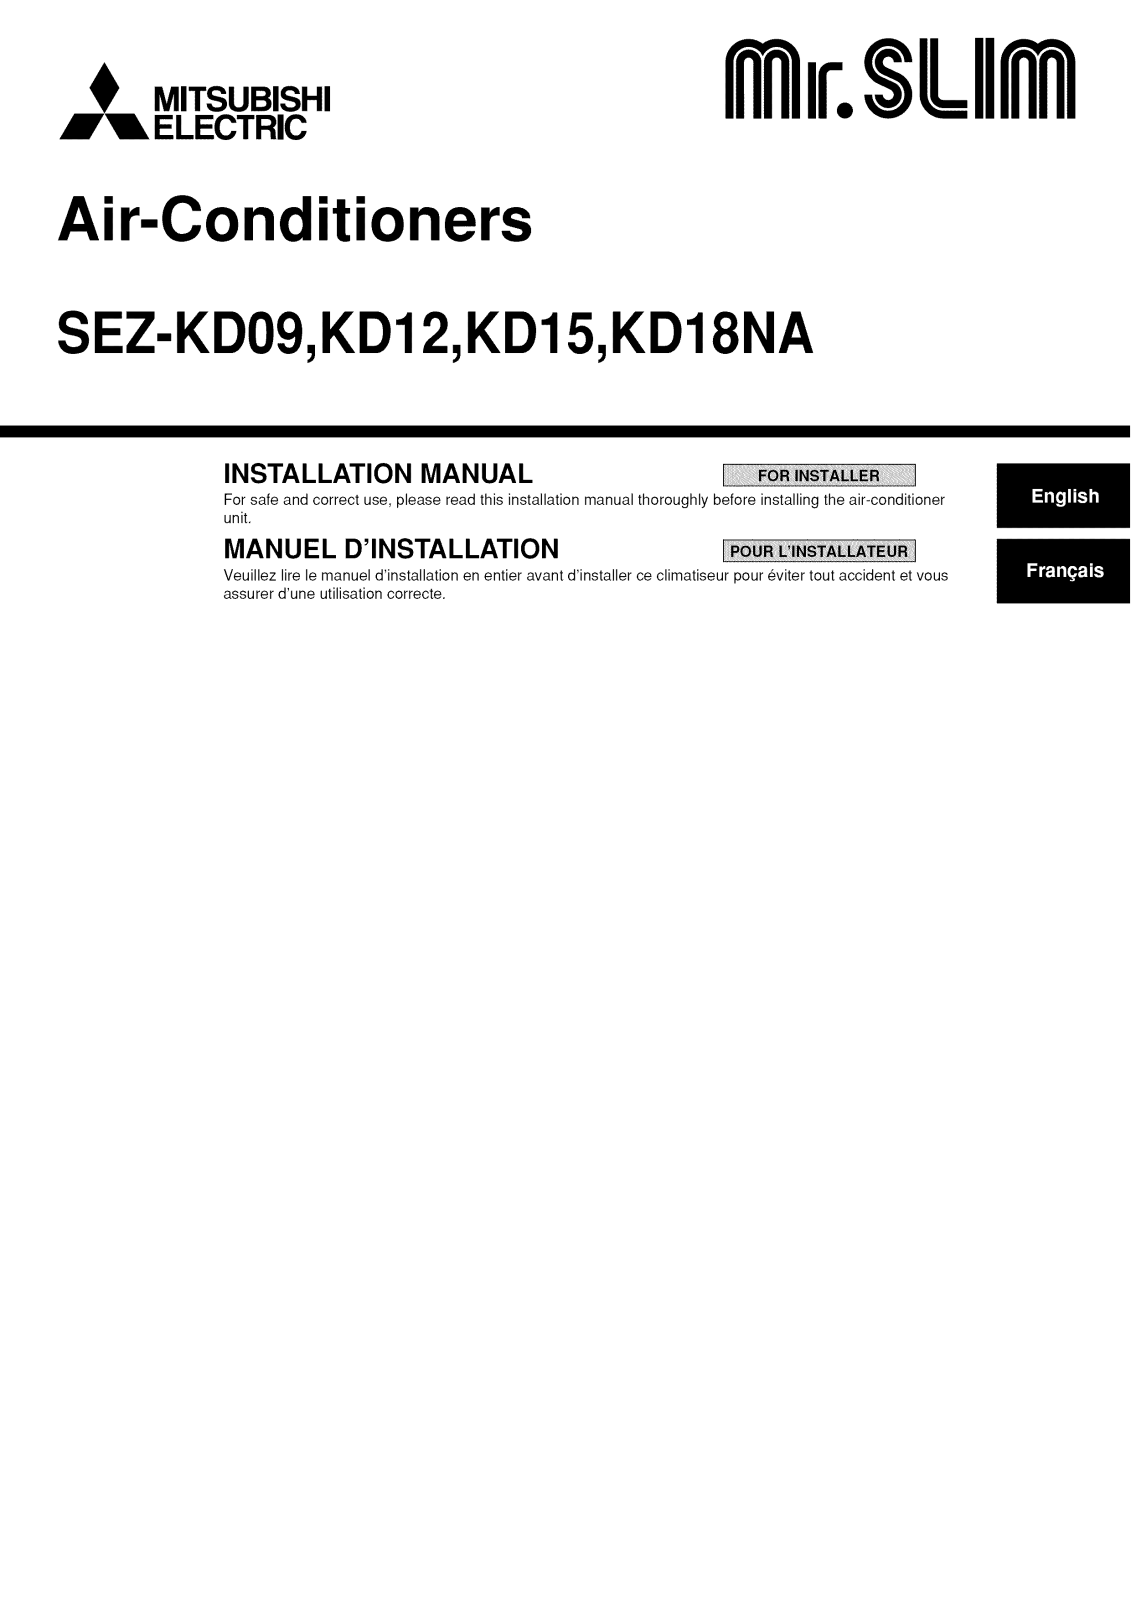 Mitsubishi SEZ-KD18NA4, SEZ-KD12NA4, SEZ-KD15NA, SEZ-KD15NA4, SEZ-KD09NA Installation Guide